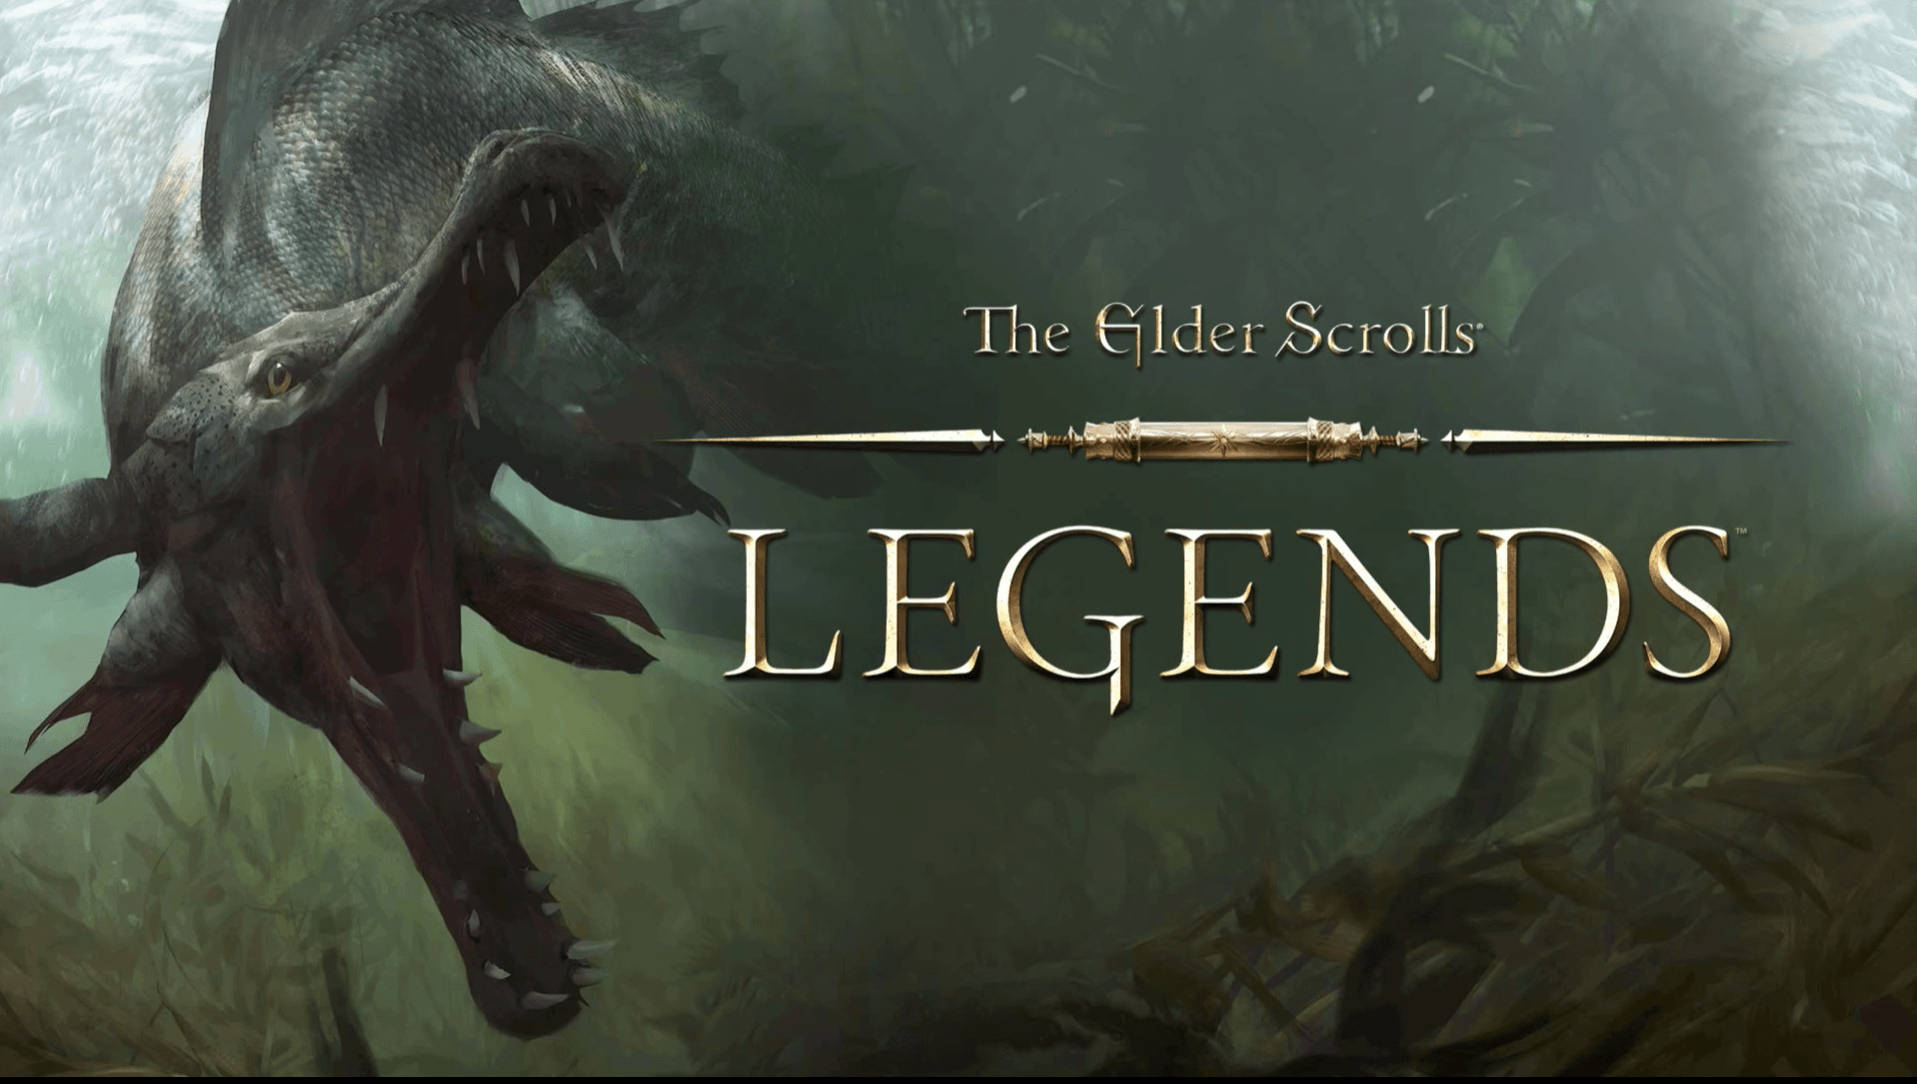 Slaughterfish The Elder Scrolls Legends desktop wallpaper.